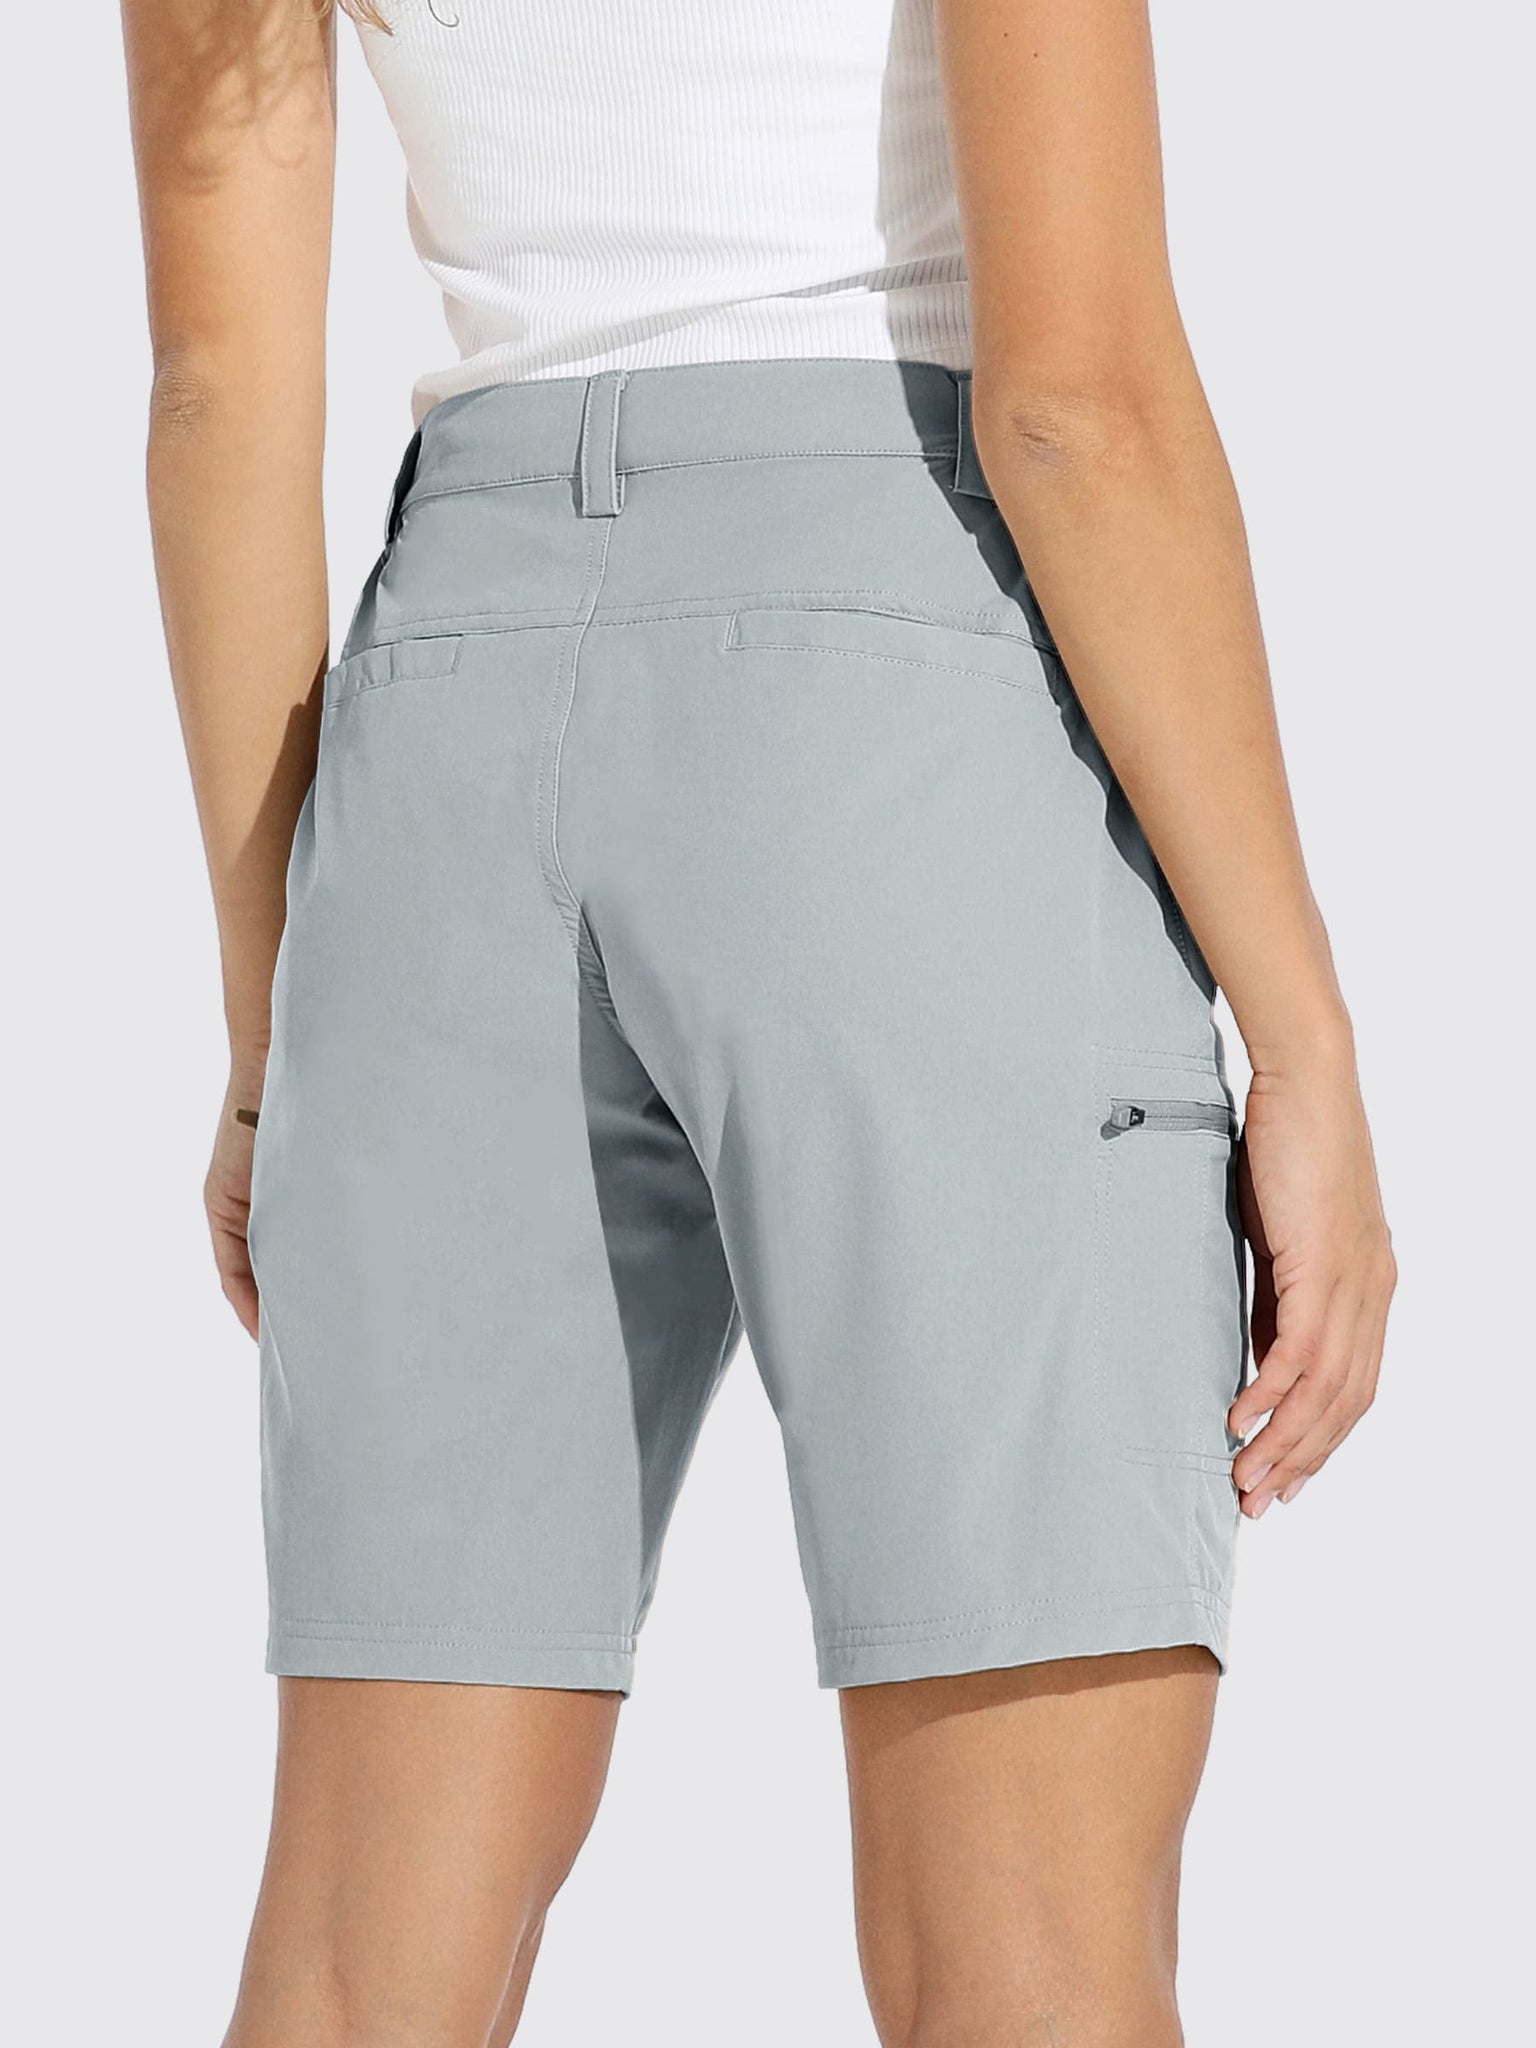 Women's Outdoor Cargo Shorts 10 Inseam_LightGray2